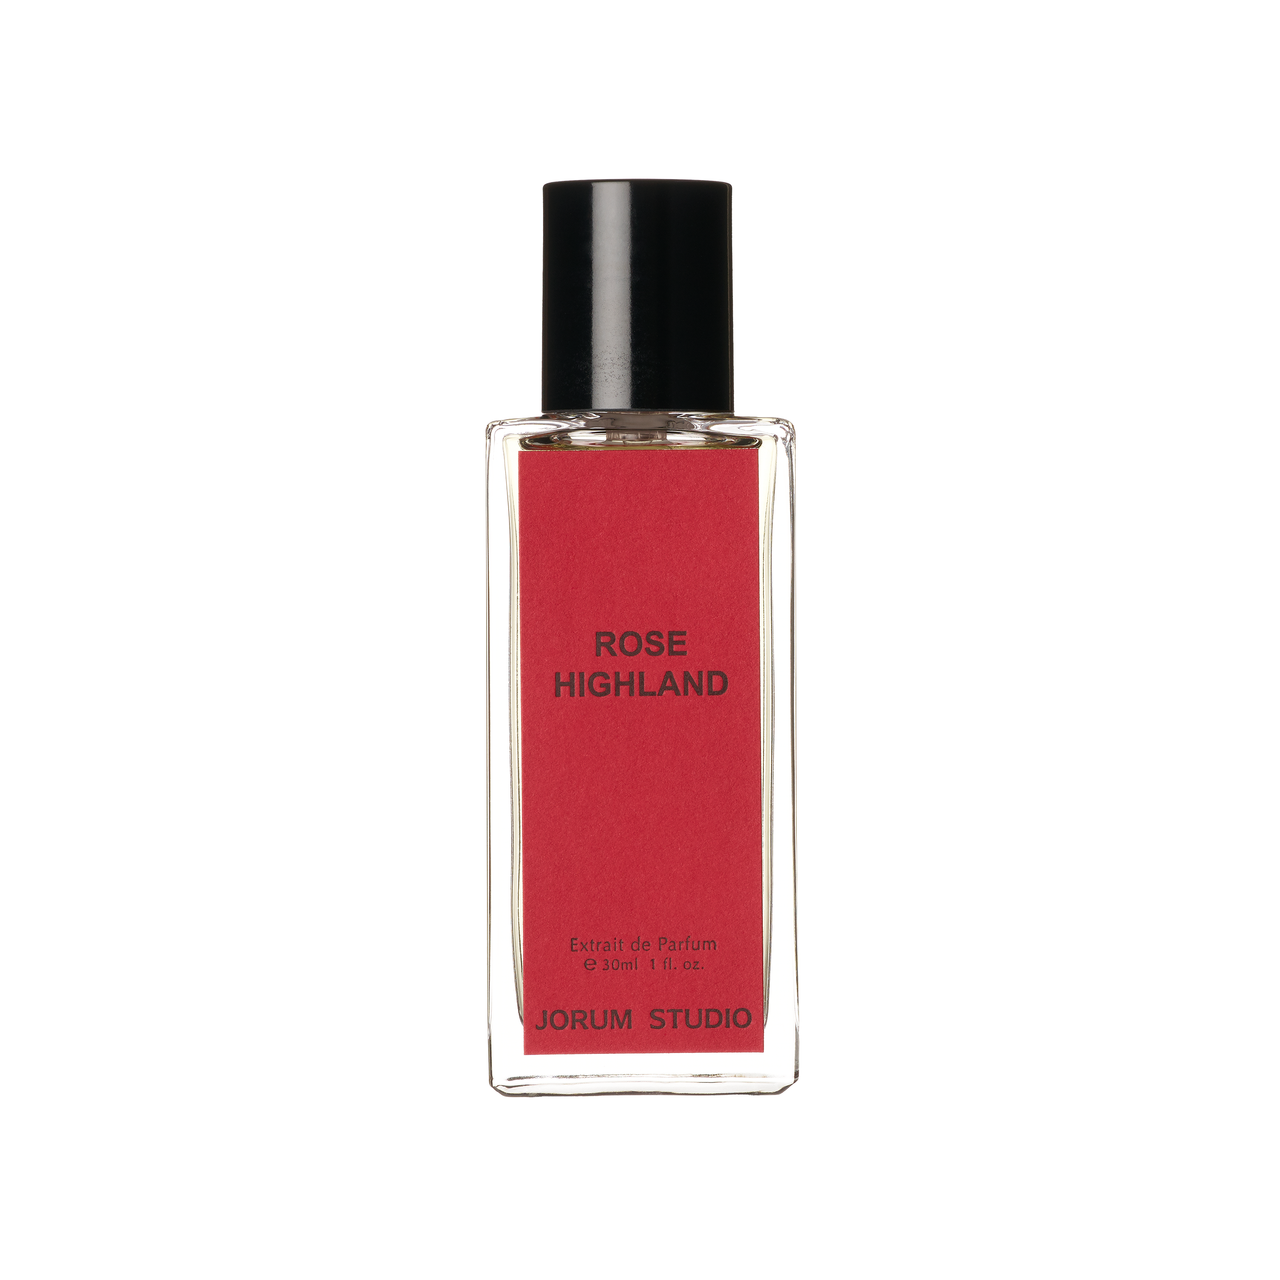 30ml bottle of Rose Highland Extrait de Parfum by independent Scottish perfumers Jorum Studio, with a deep red label